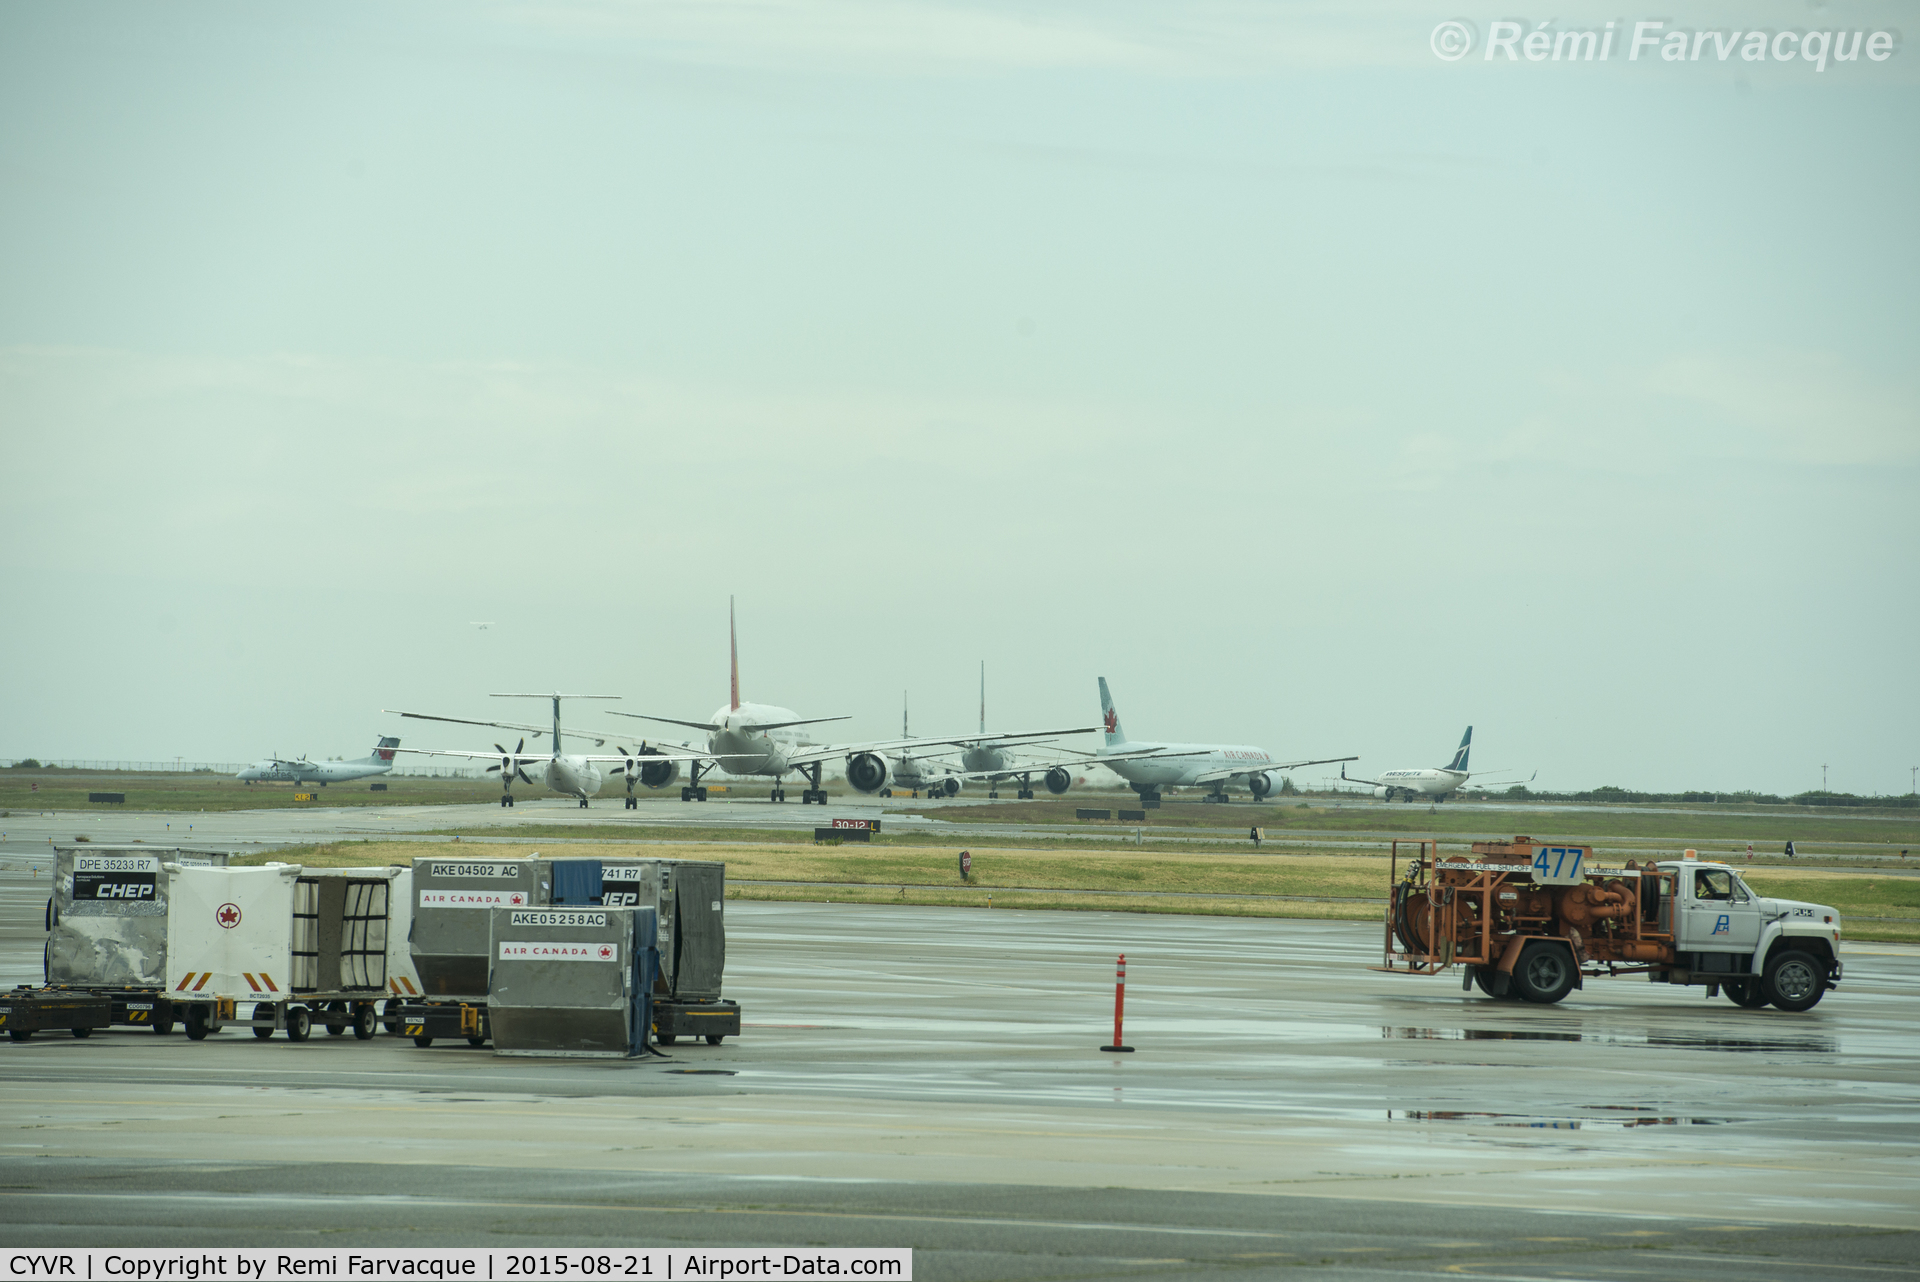 Vancouver International Airport, Vancouver, British Columbia Canada (CYVR) - Queue for departure, south runway.